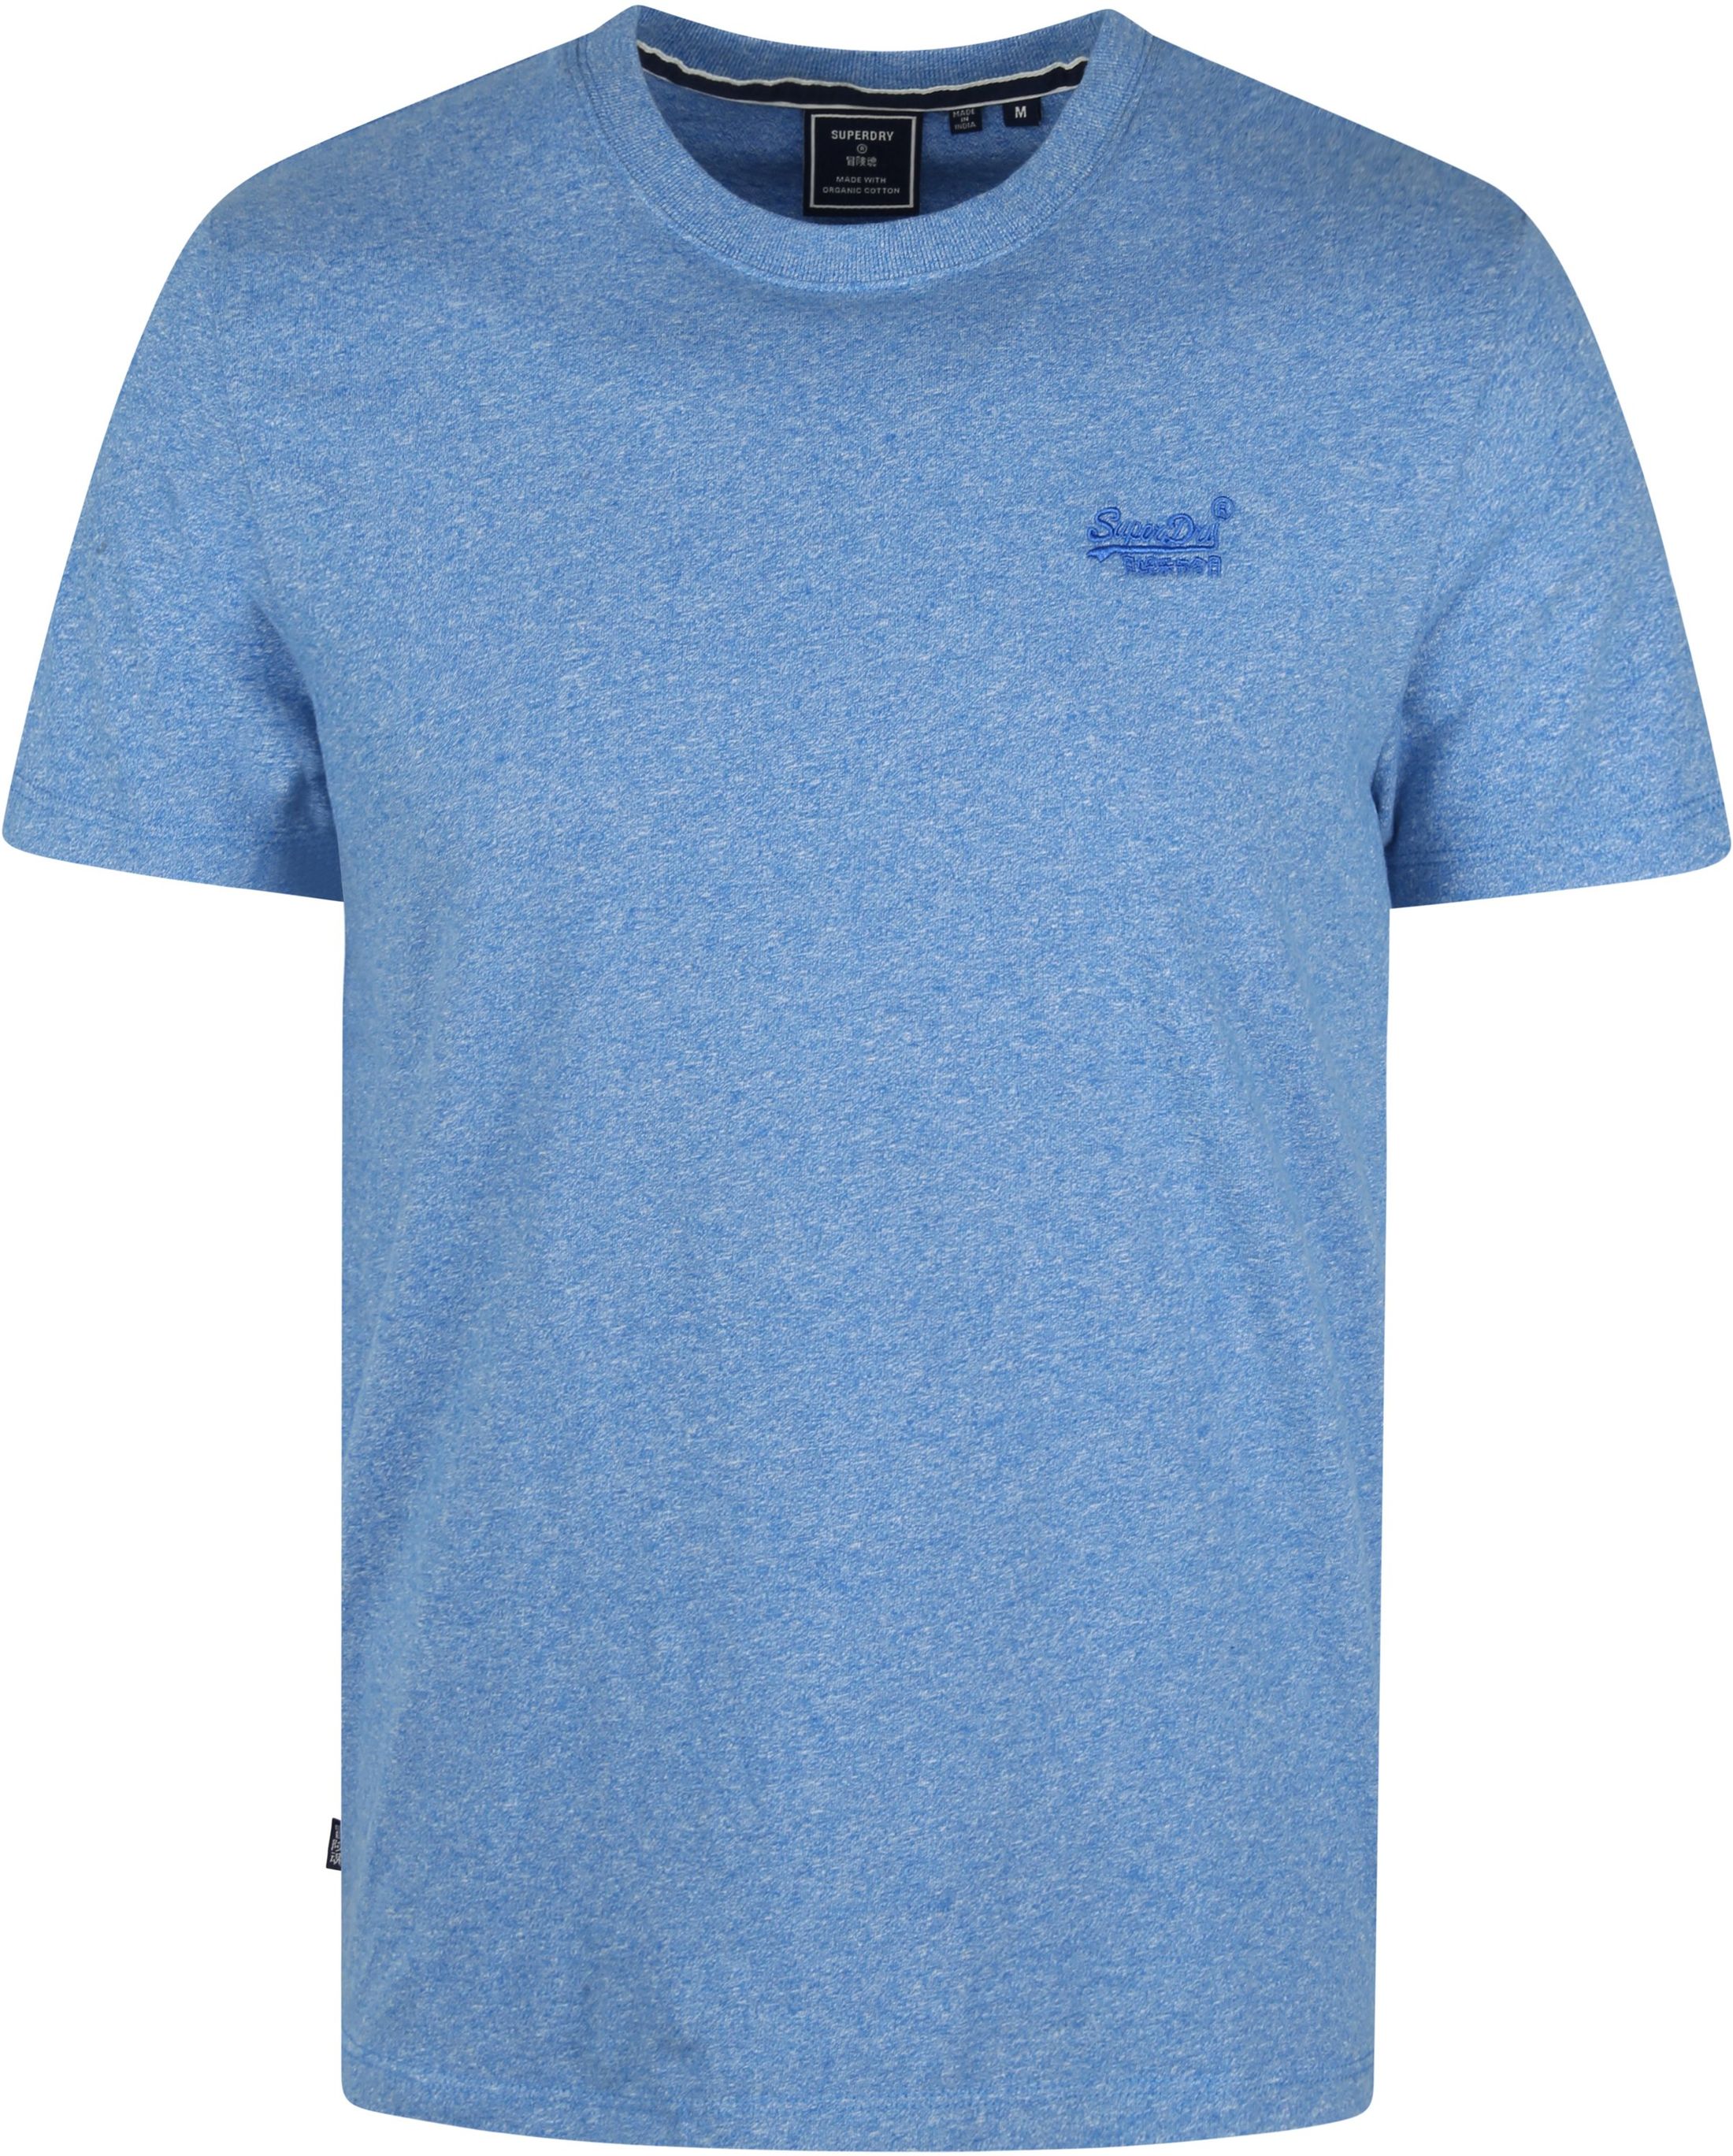 Superdry Classic T Shirt Blue size 3XL